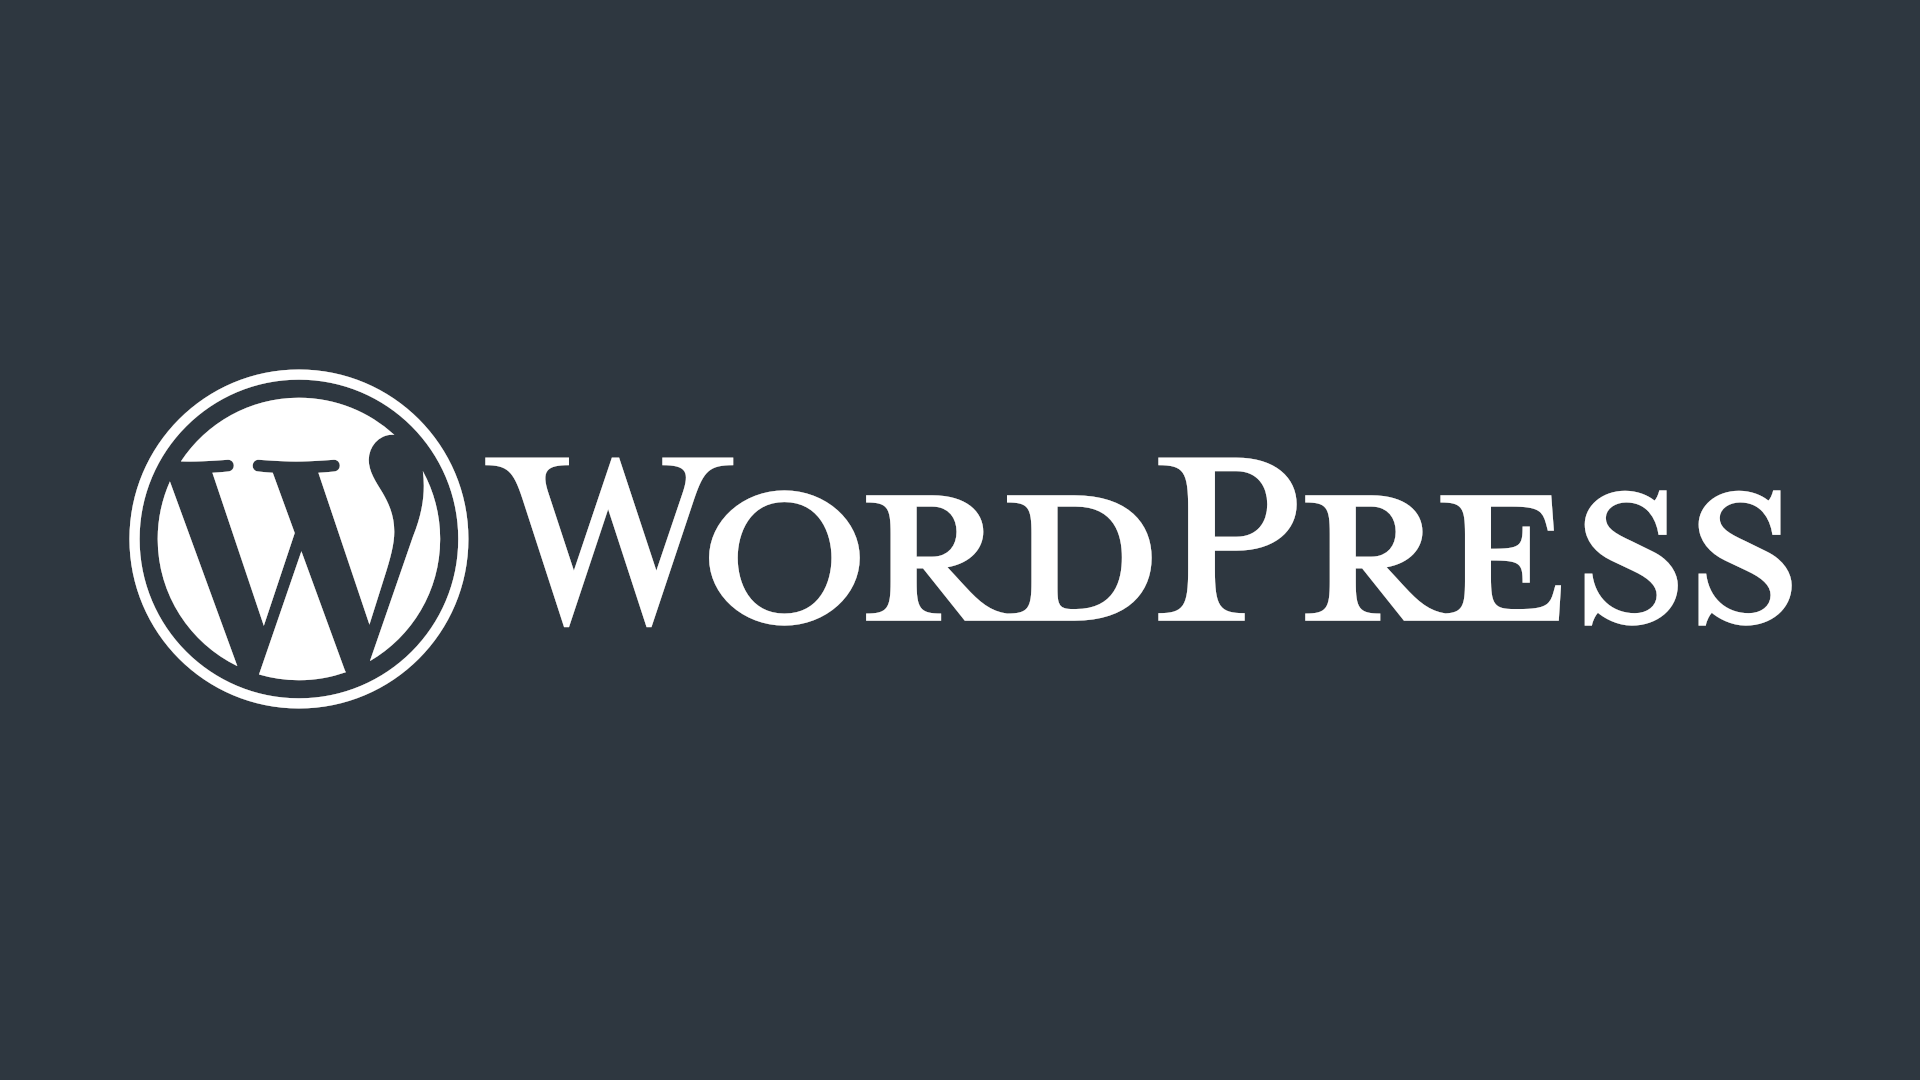 WordPress 6.1 Beta 1 • Help Test • #WPTranslationDay • Video Courses #LearnWP